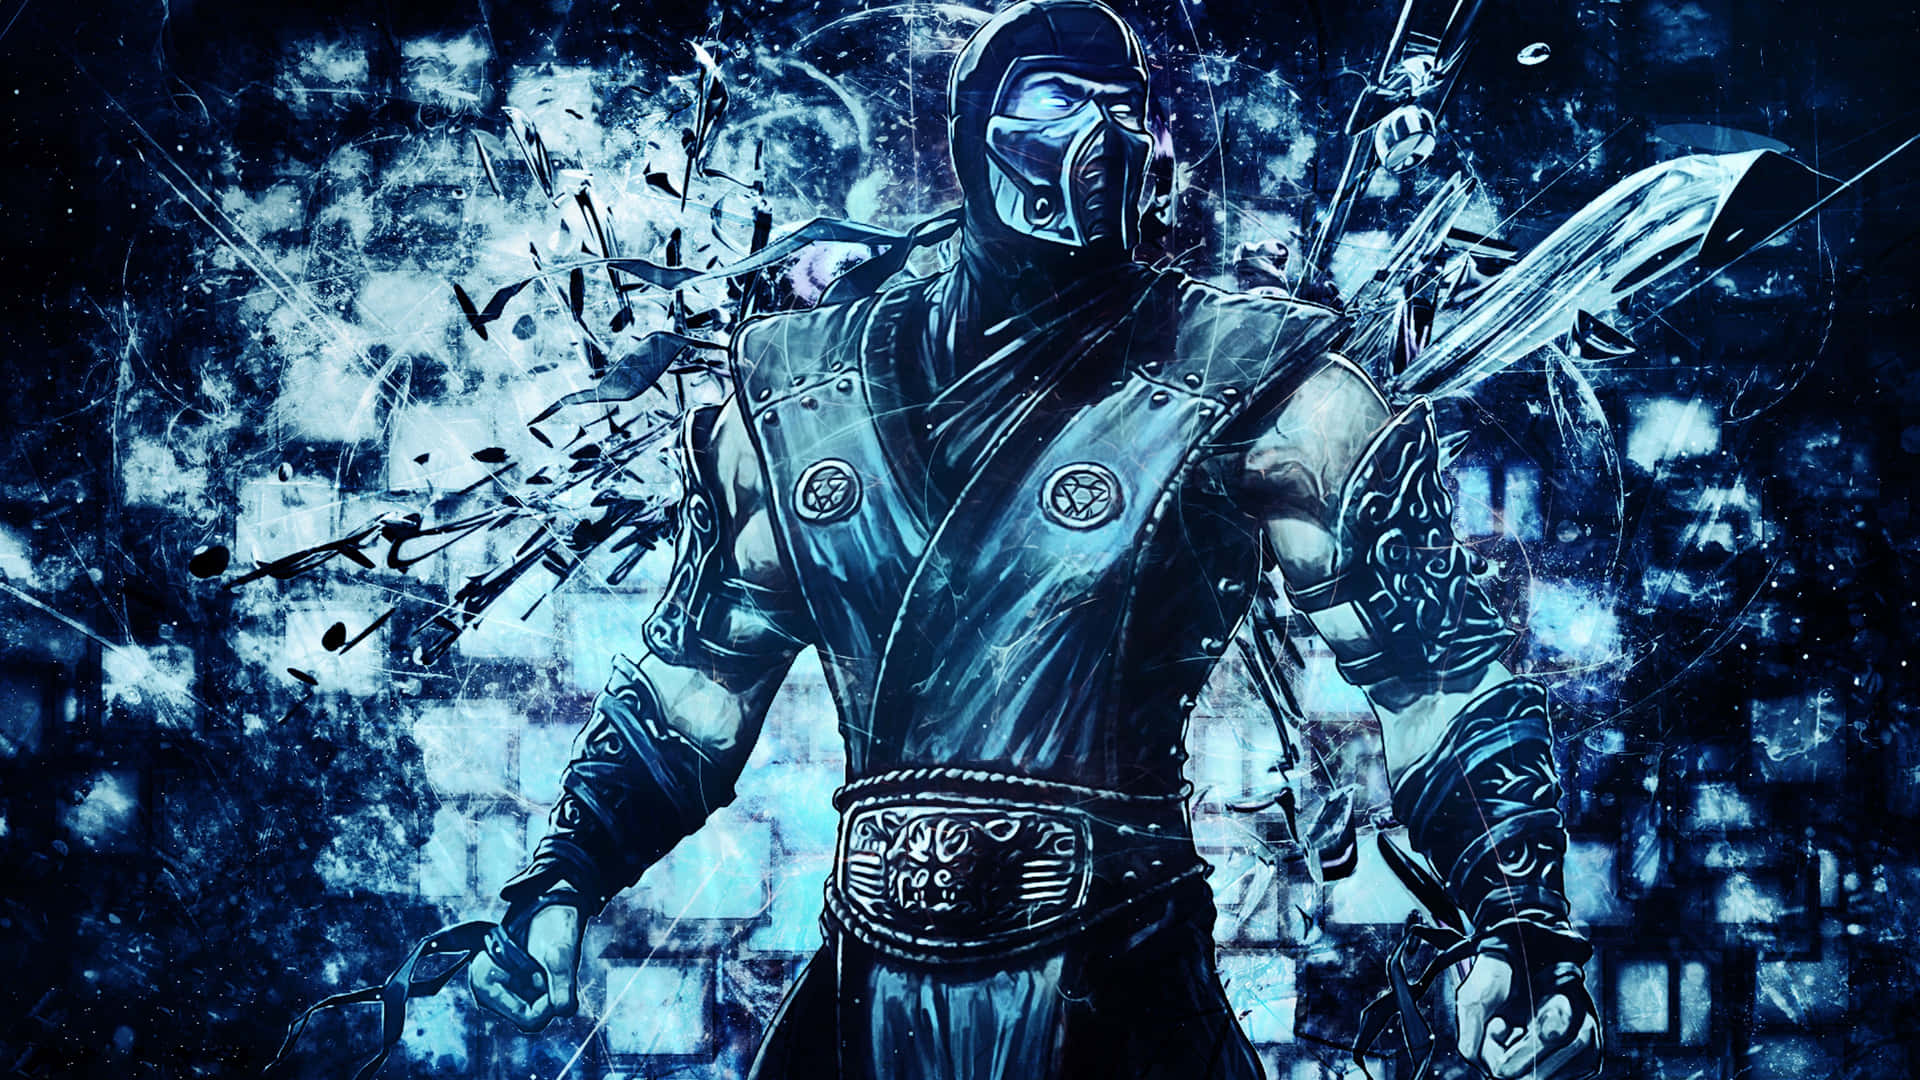 Sub-Zero Unleashes the Ice Storm in Mortal Kombat Wallpaper